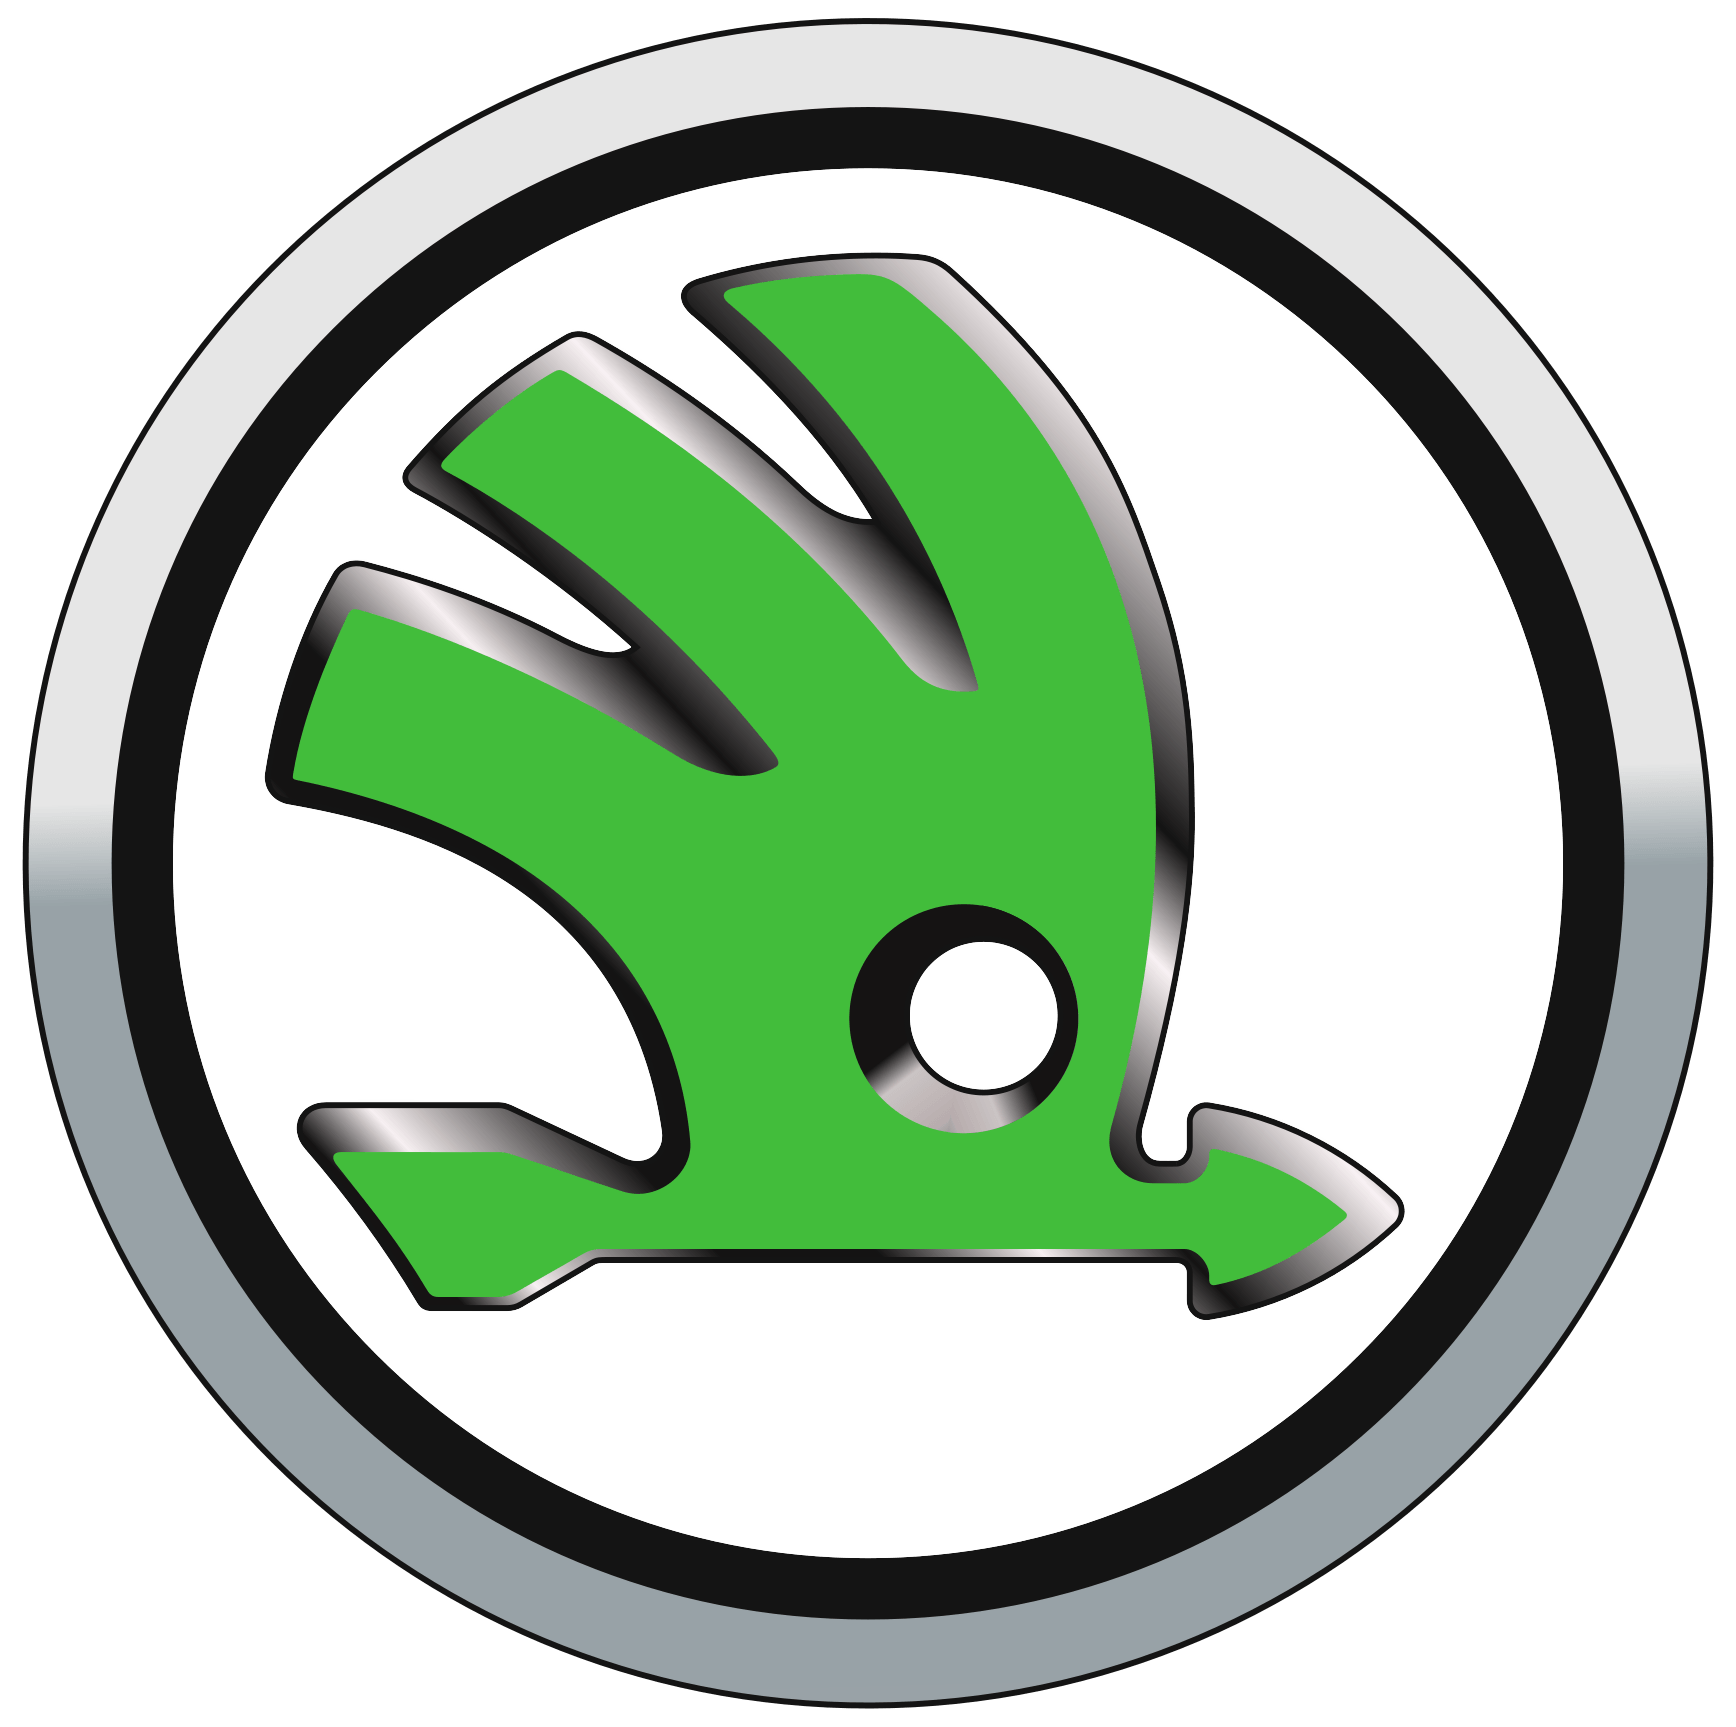 Green Y Logo - Škoda Logo, Škoda Car Symbol Meaning and History | Car Brand Names.com